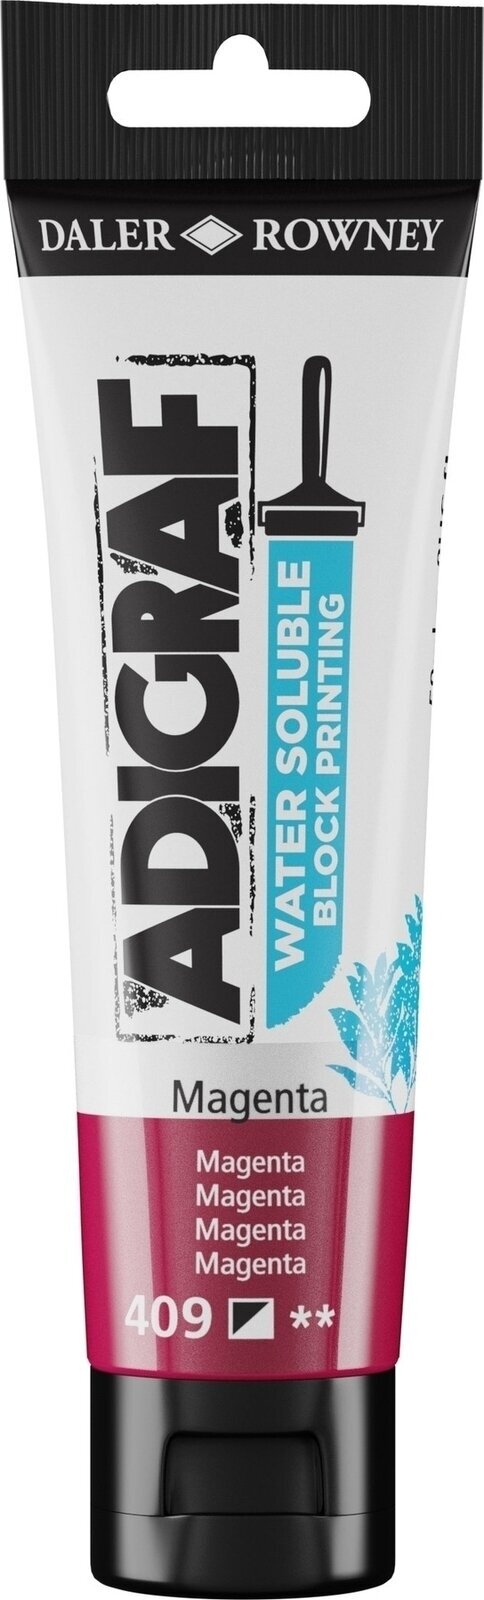 Tinta para linogravura Daler Rowney Adigraf Block Printing Water Soluble Colour Tinta para linogravura Magenta 59 ml